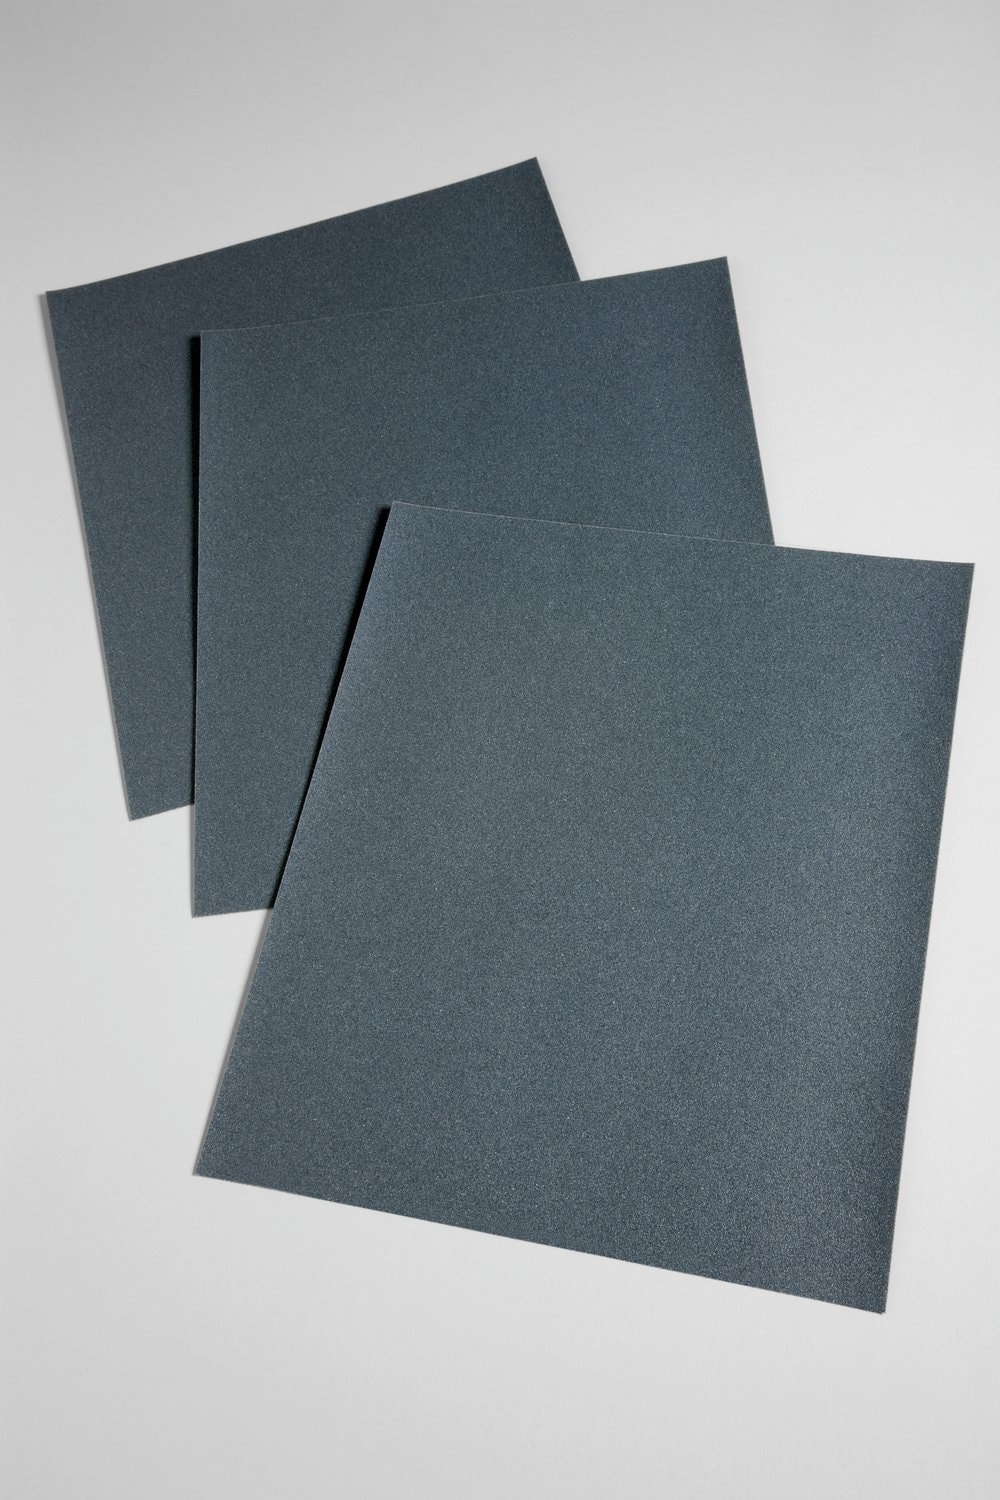 7000118315 - 3M Wetordry Paper Sheet 431Q, 150 C-weight, 9 in x 11 in, 50/Carton,
250 ea/Case